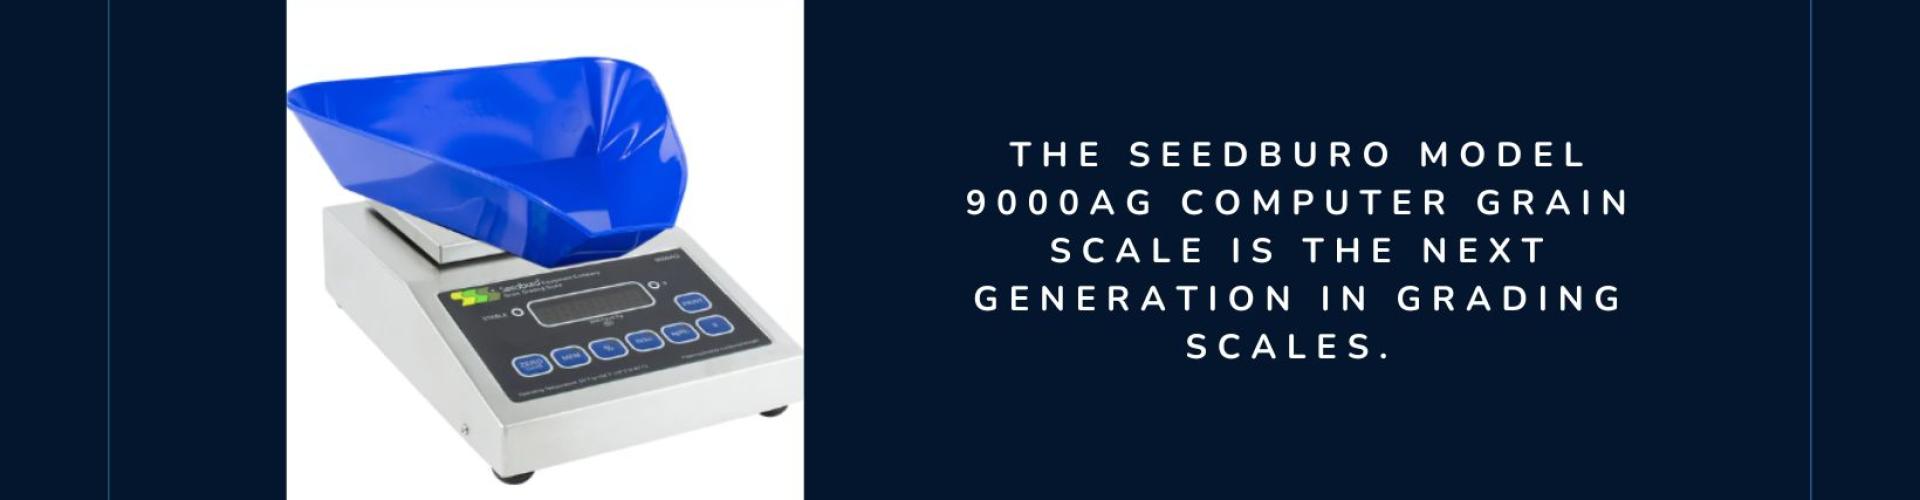 Computer Grain Grading Scale - 9000AG